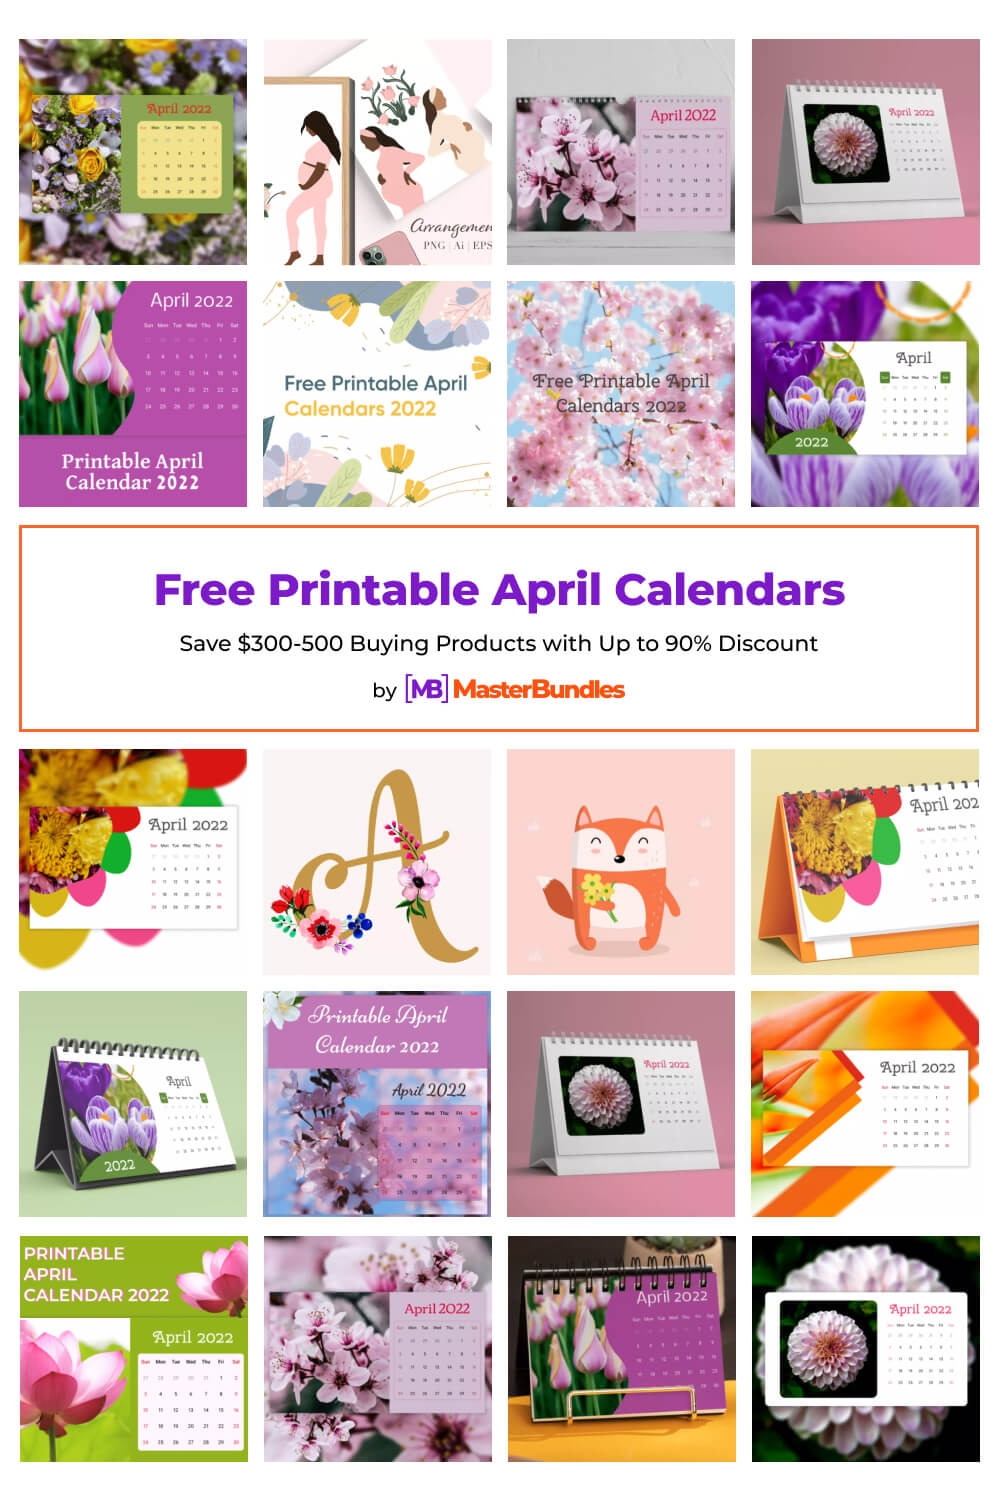 free printable april calendars pinterest image.